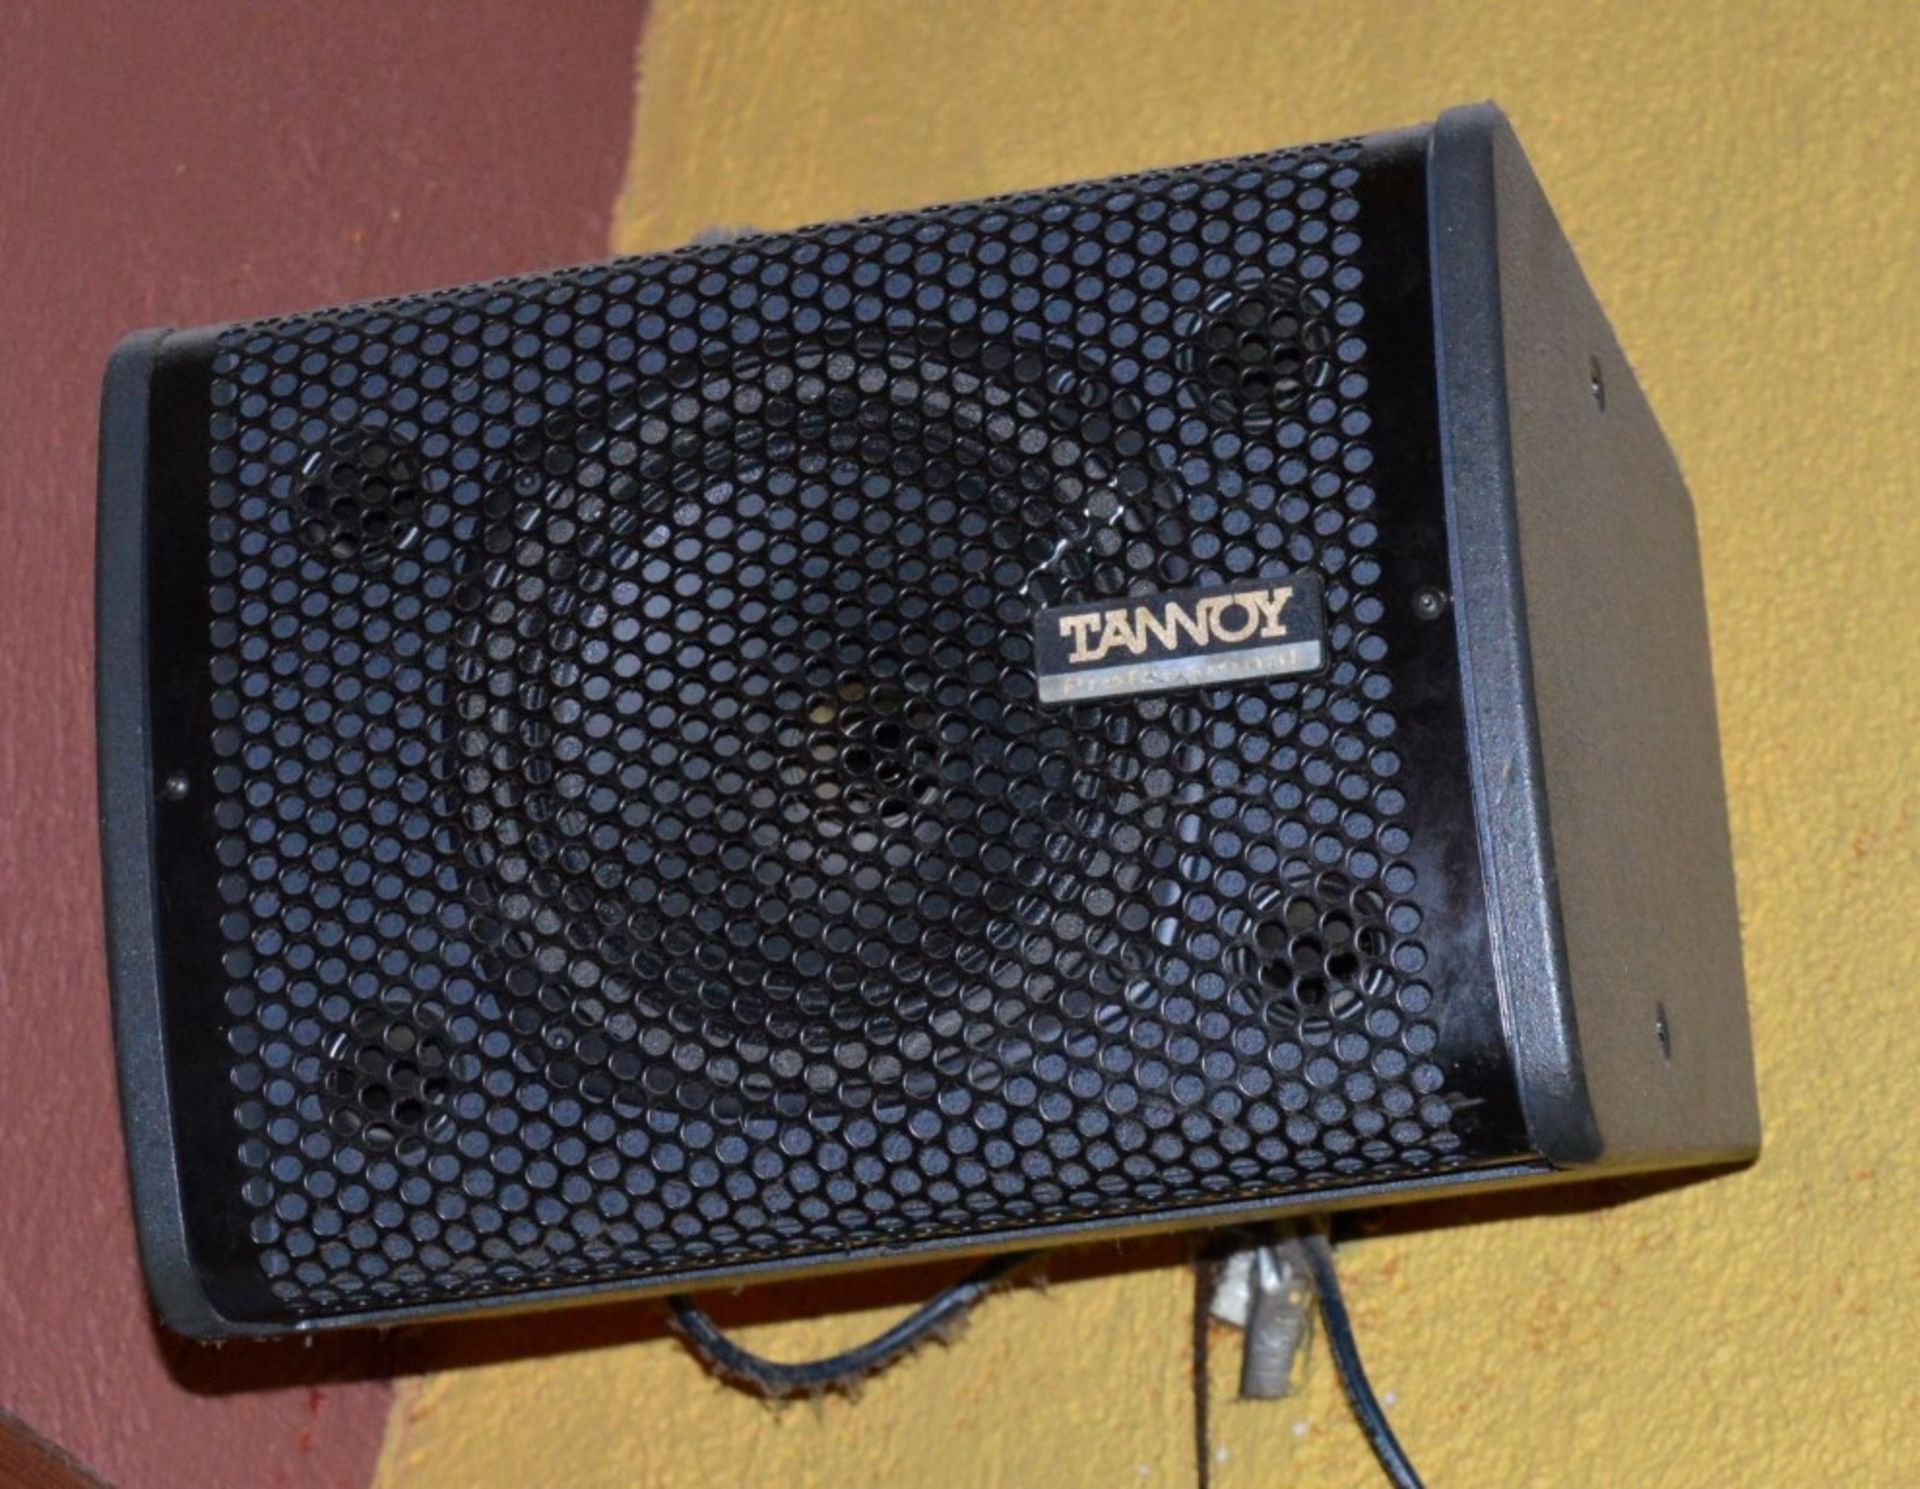 2 x Tannoy i8 130 watt 8 Ω Dual Concentric Loudspeakers - CL150 - Location: Altrincham WA14 - More - Image 2 of 3